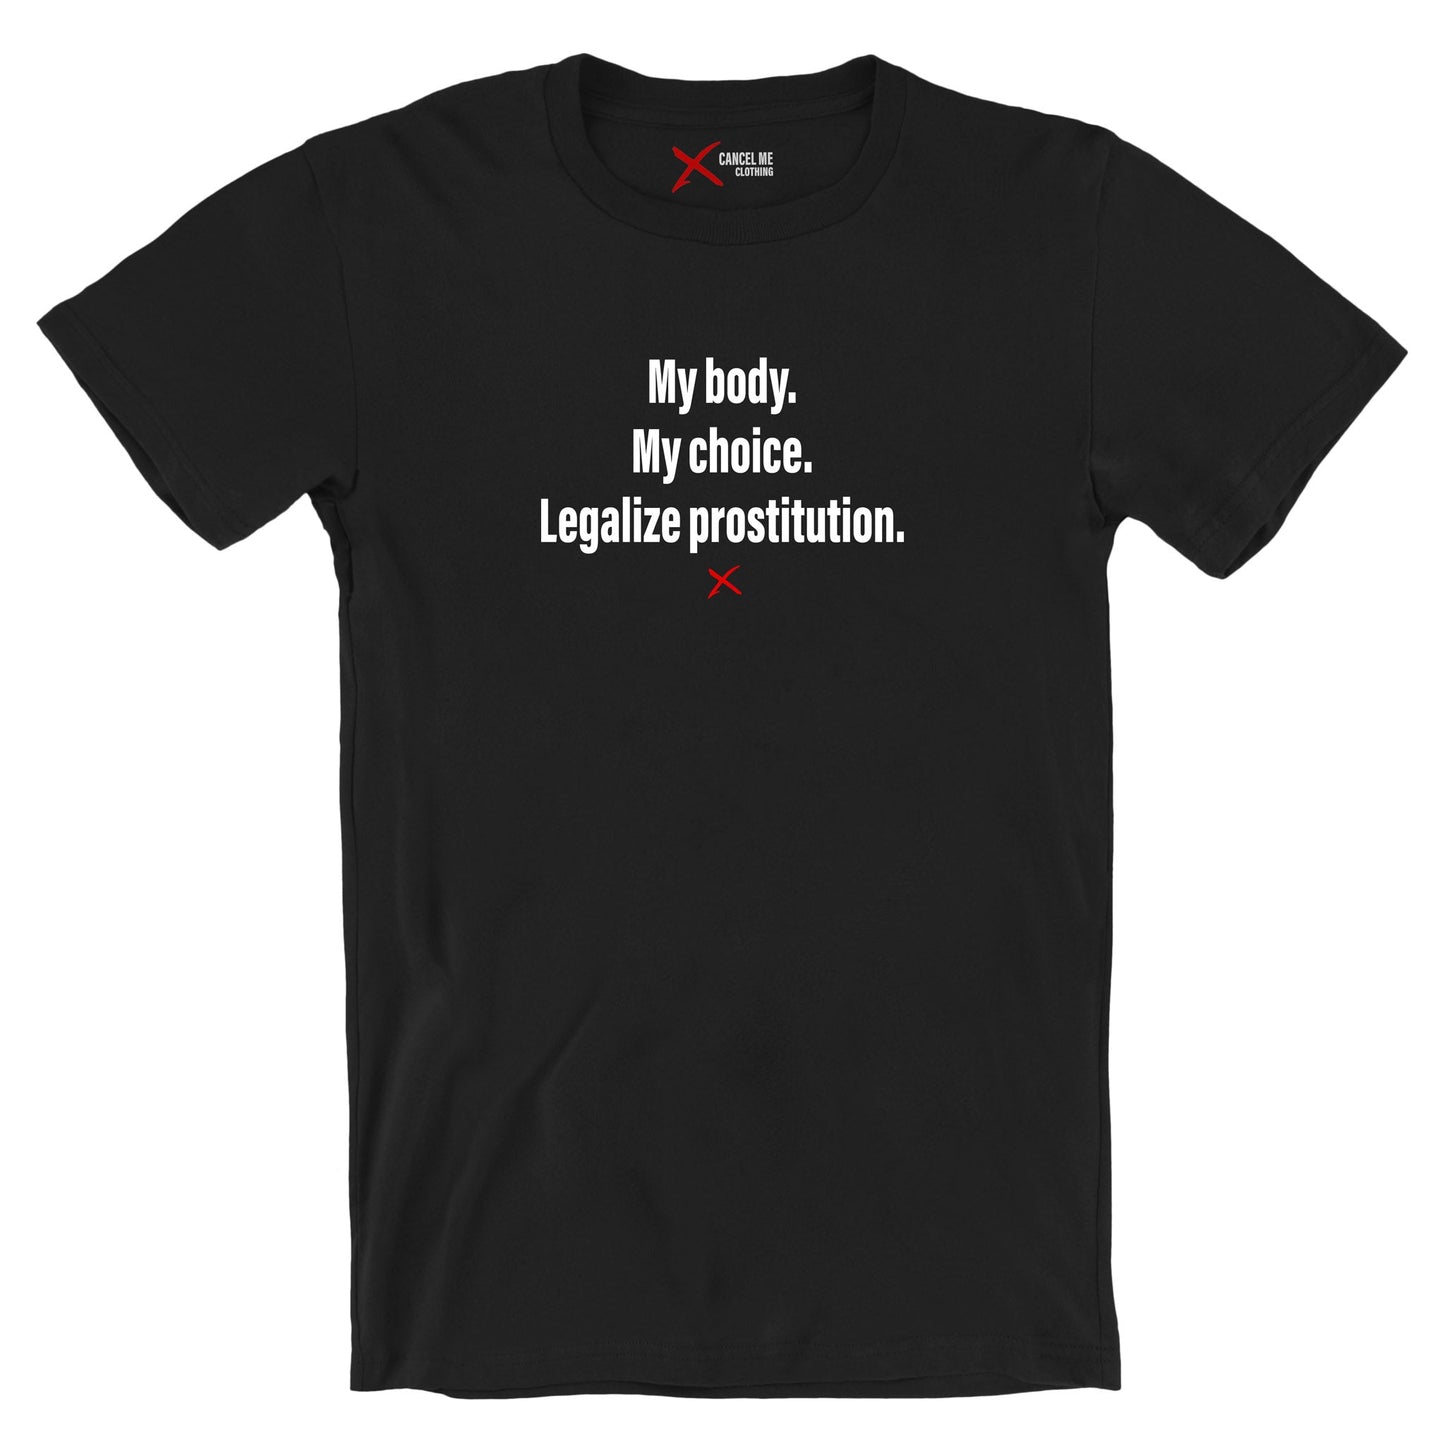 My body. My choice. Legalize prostitution. - Shirt